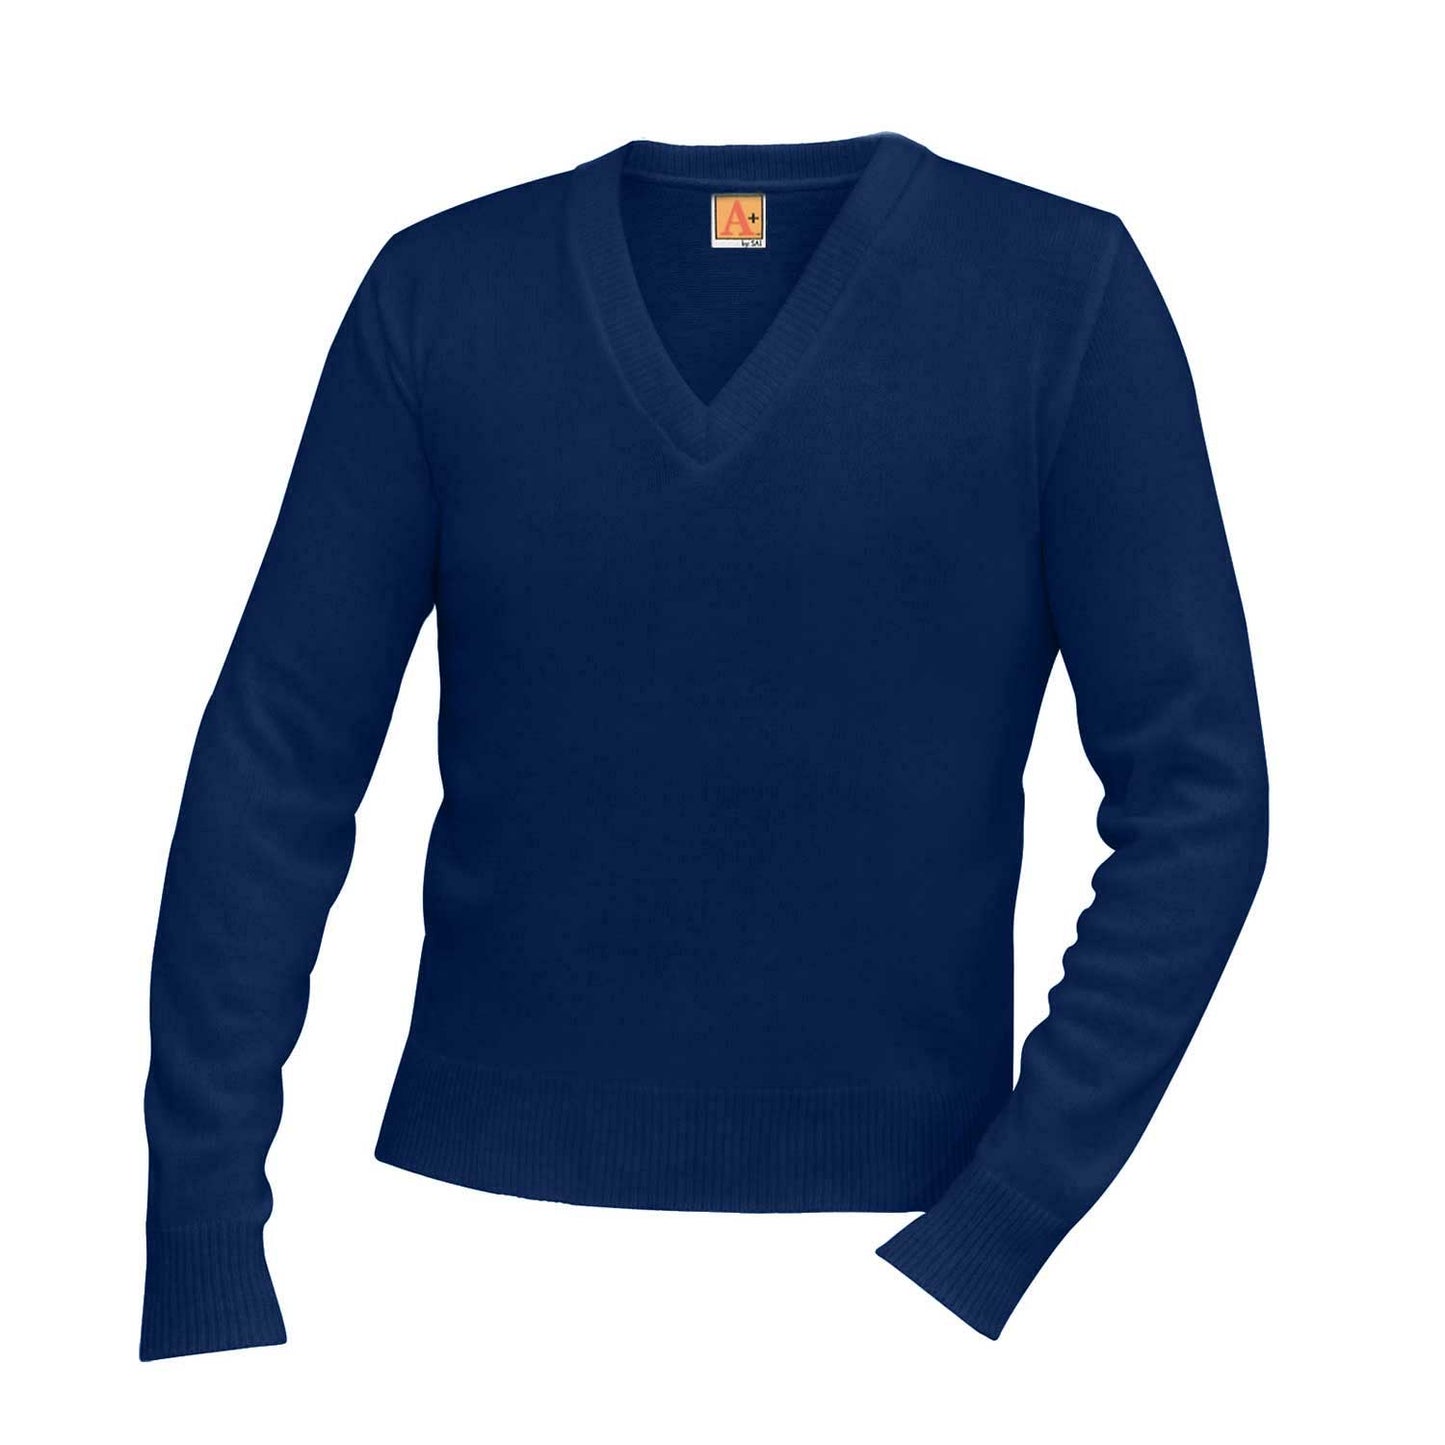 Unisex V-Neck Pullover Jersey Knit Sweater w/Logo - 1121